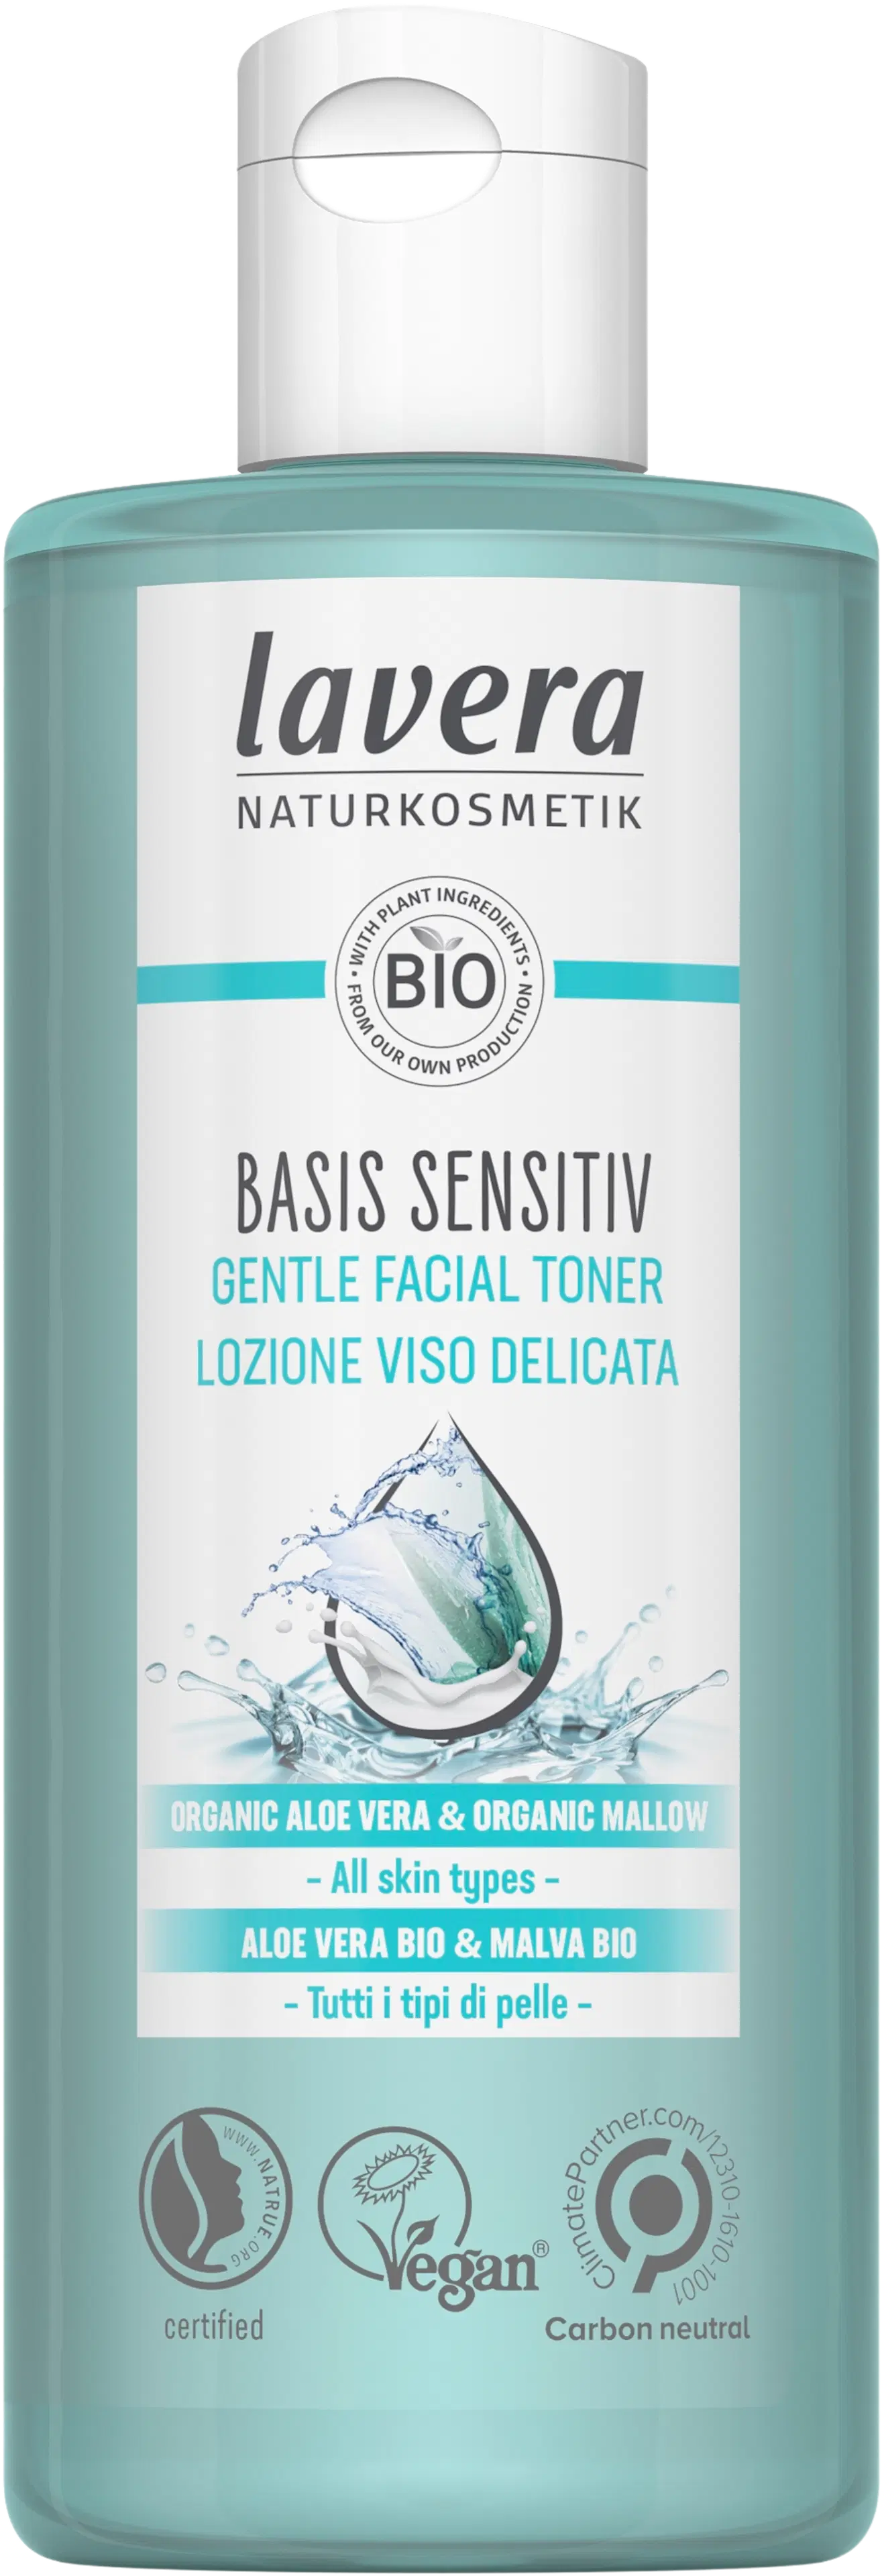 lavera Basis Sensitiv Gentle Facial Toner 200ml